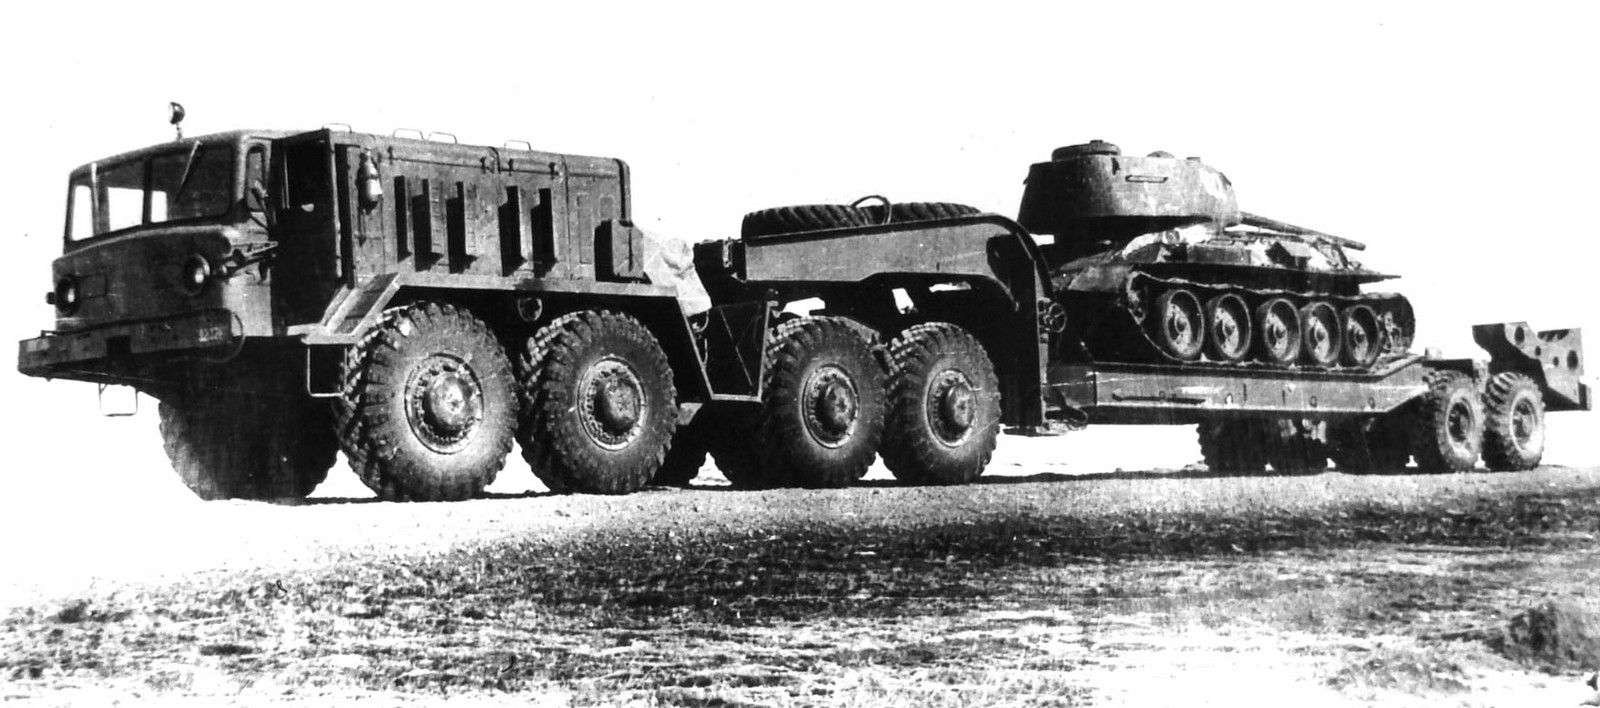 Ранний МАЗ-537Г с танковым полуприцепом МАЗ-5247Г. 1967 год (из архива НИИЦ АТ)